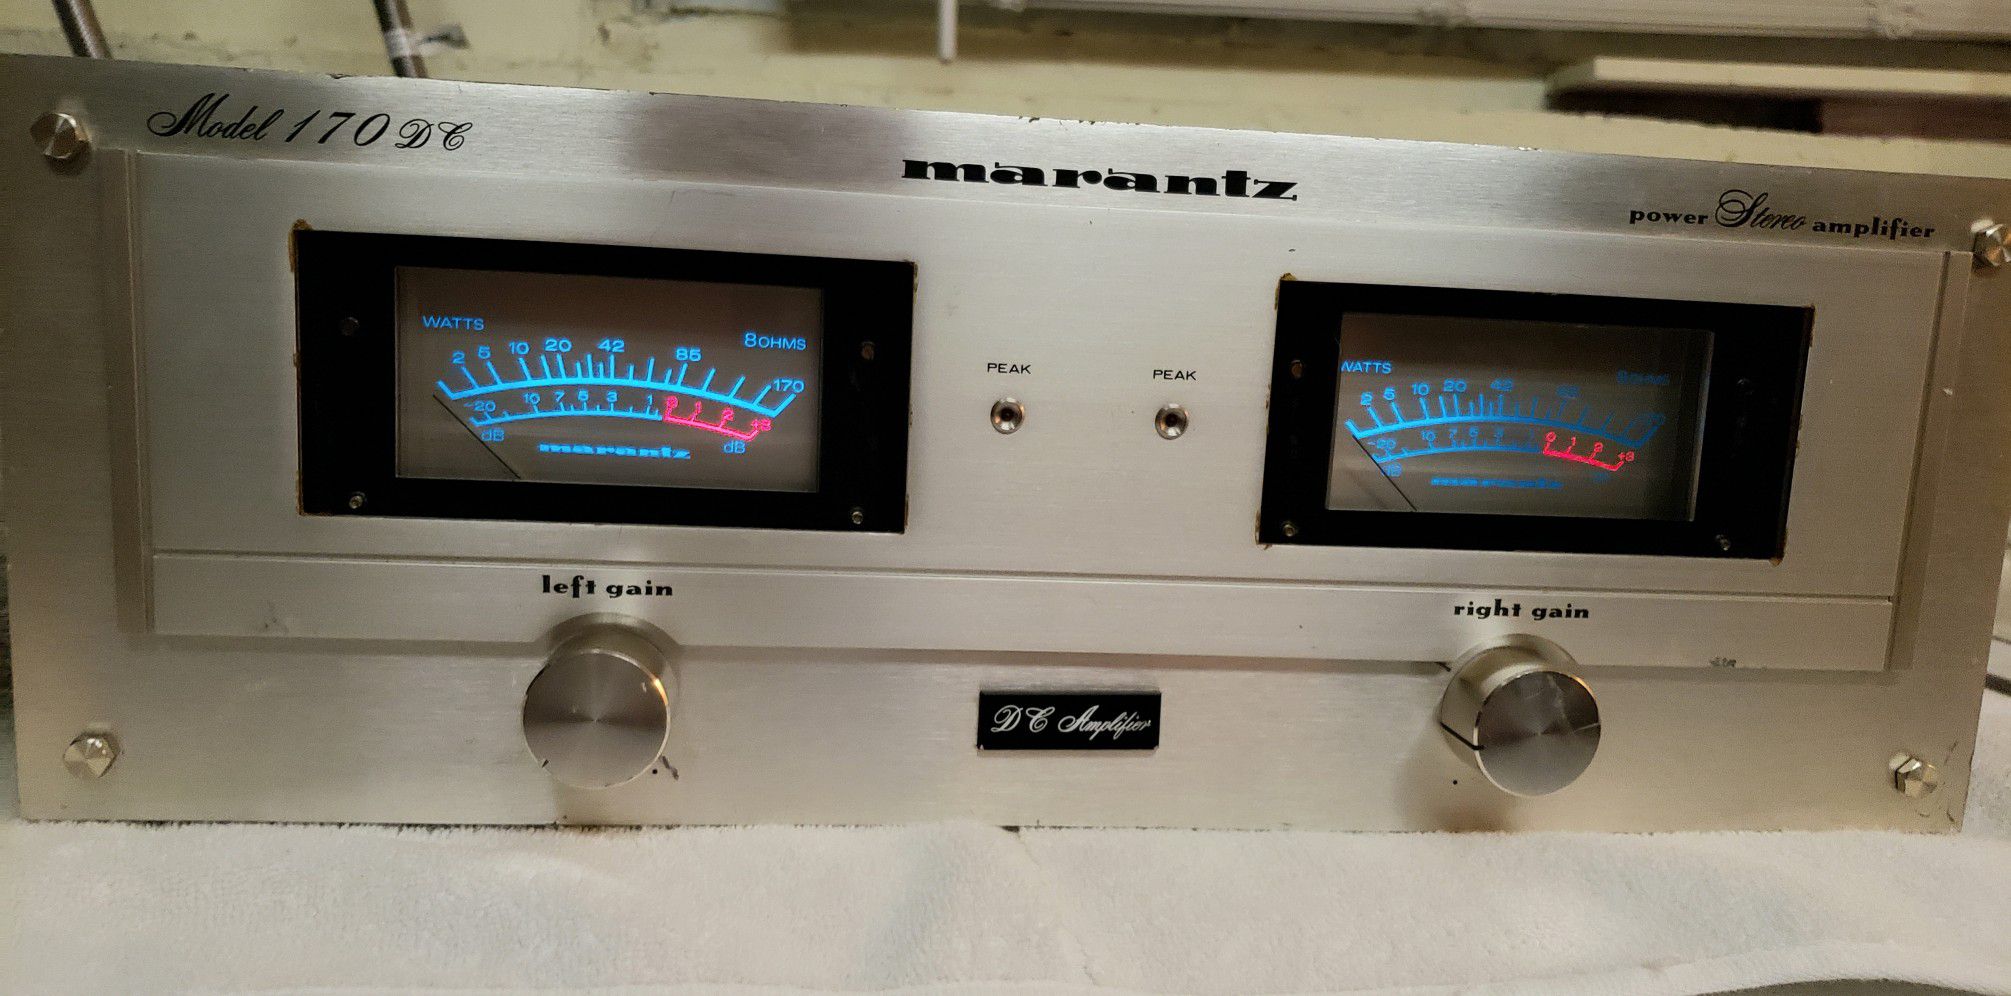 Marantz Amplifier - Model 170DC